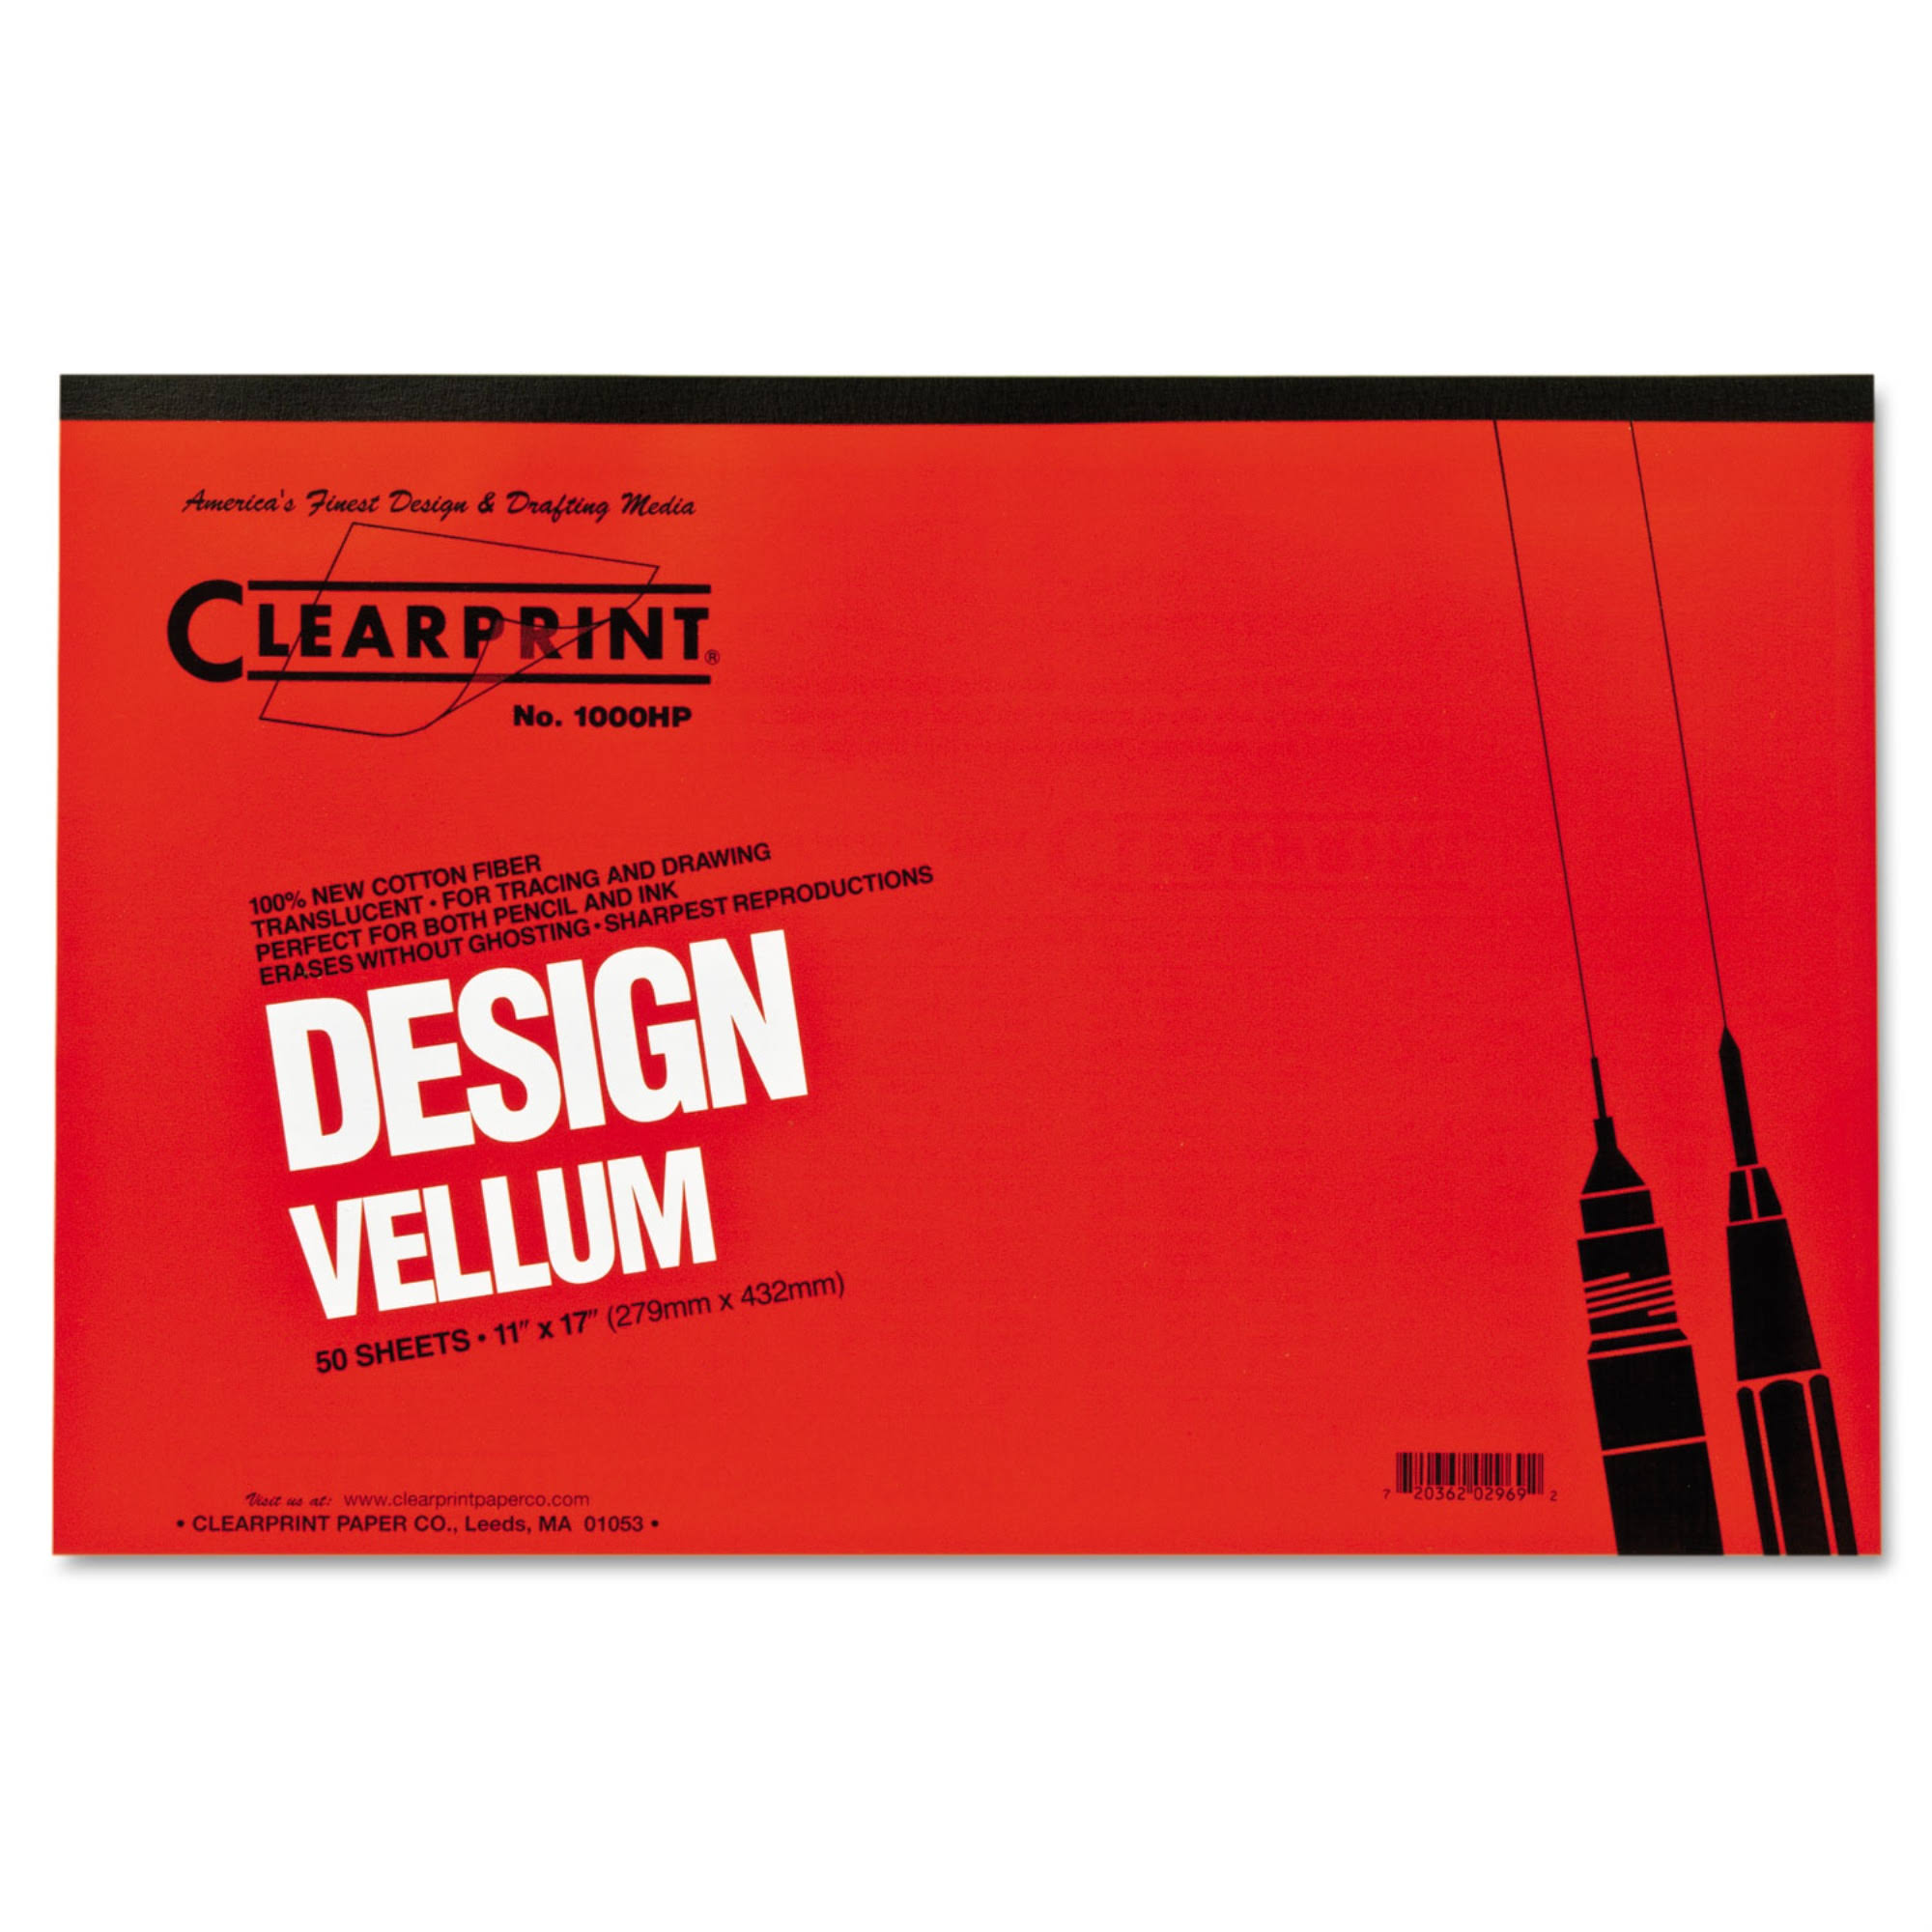 Clearprint 10001416 Design Vellum Paper - 16lbs, White, 11"x17", 50 Sheets